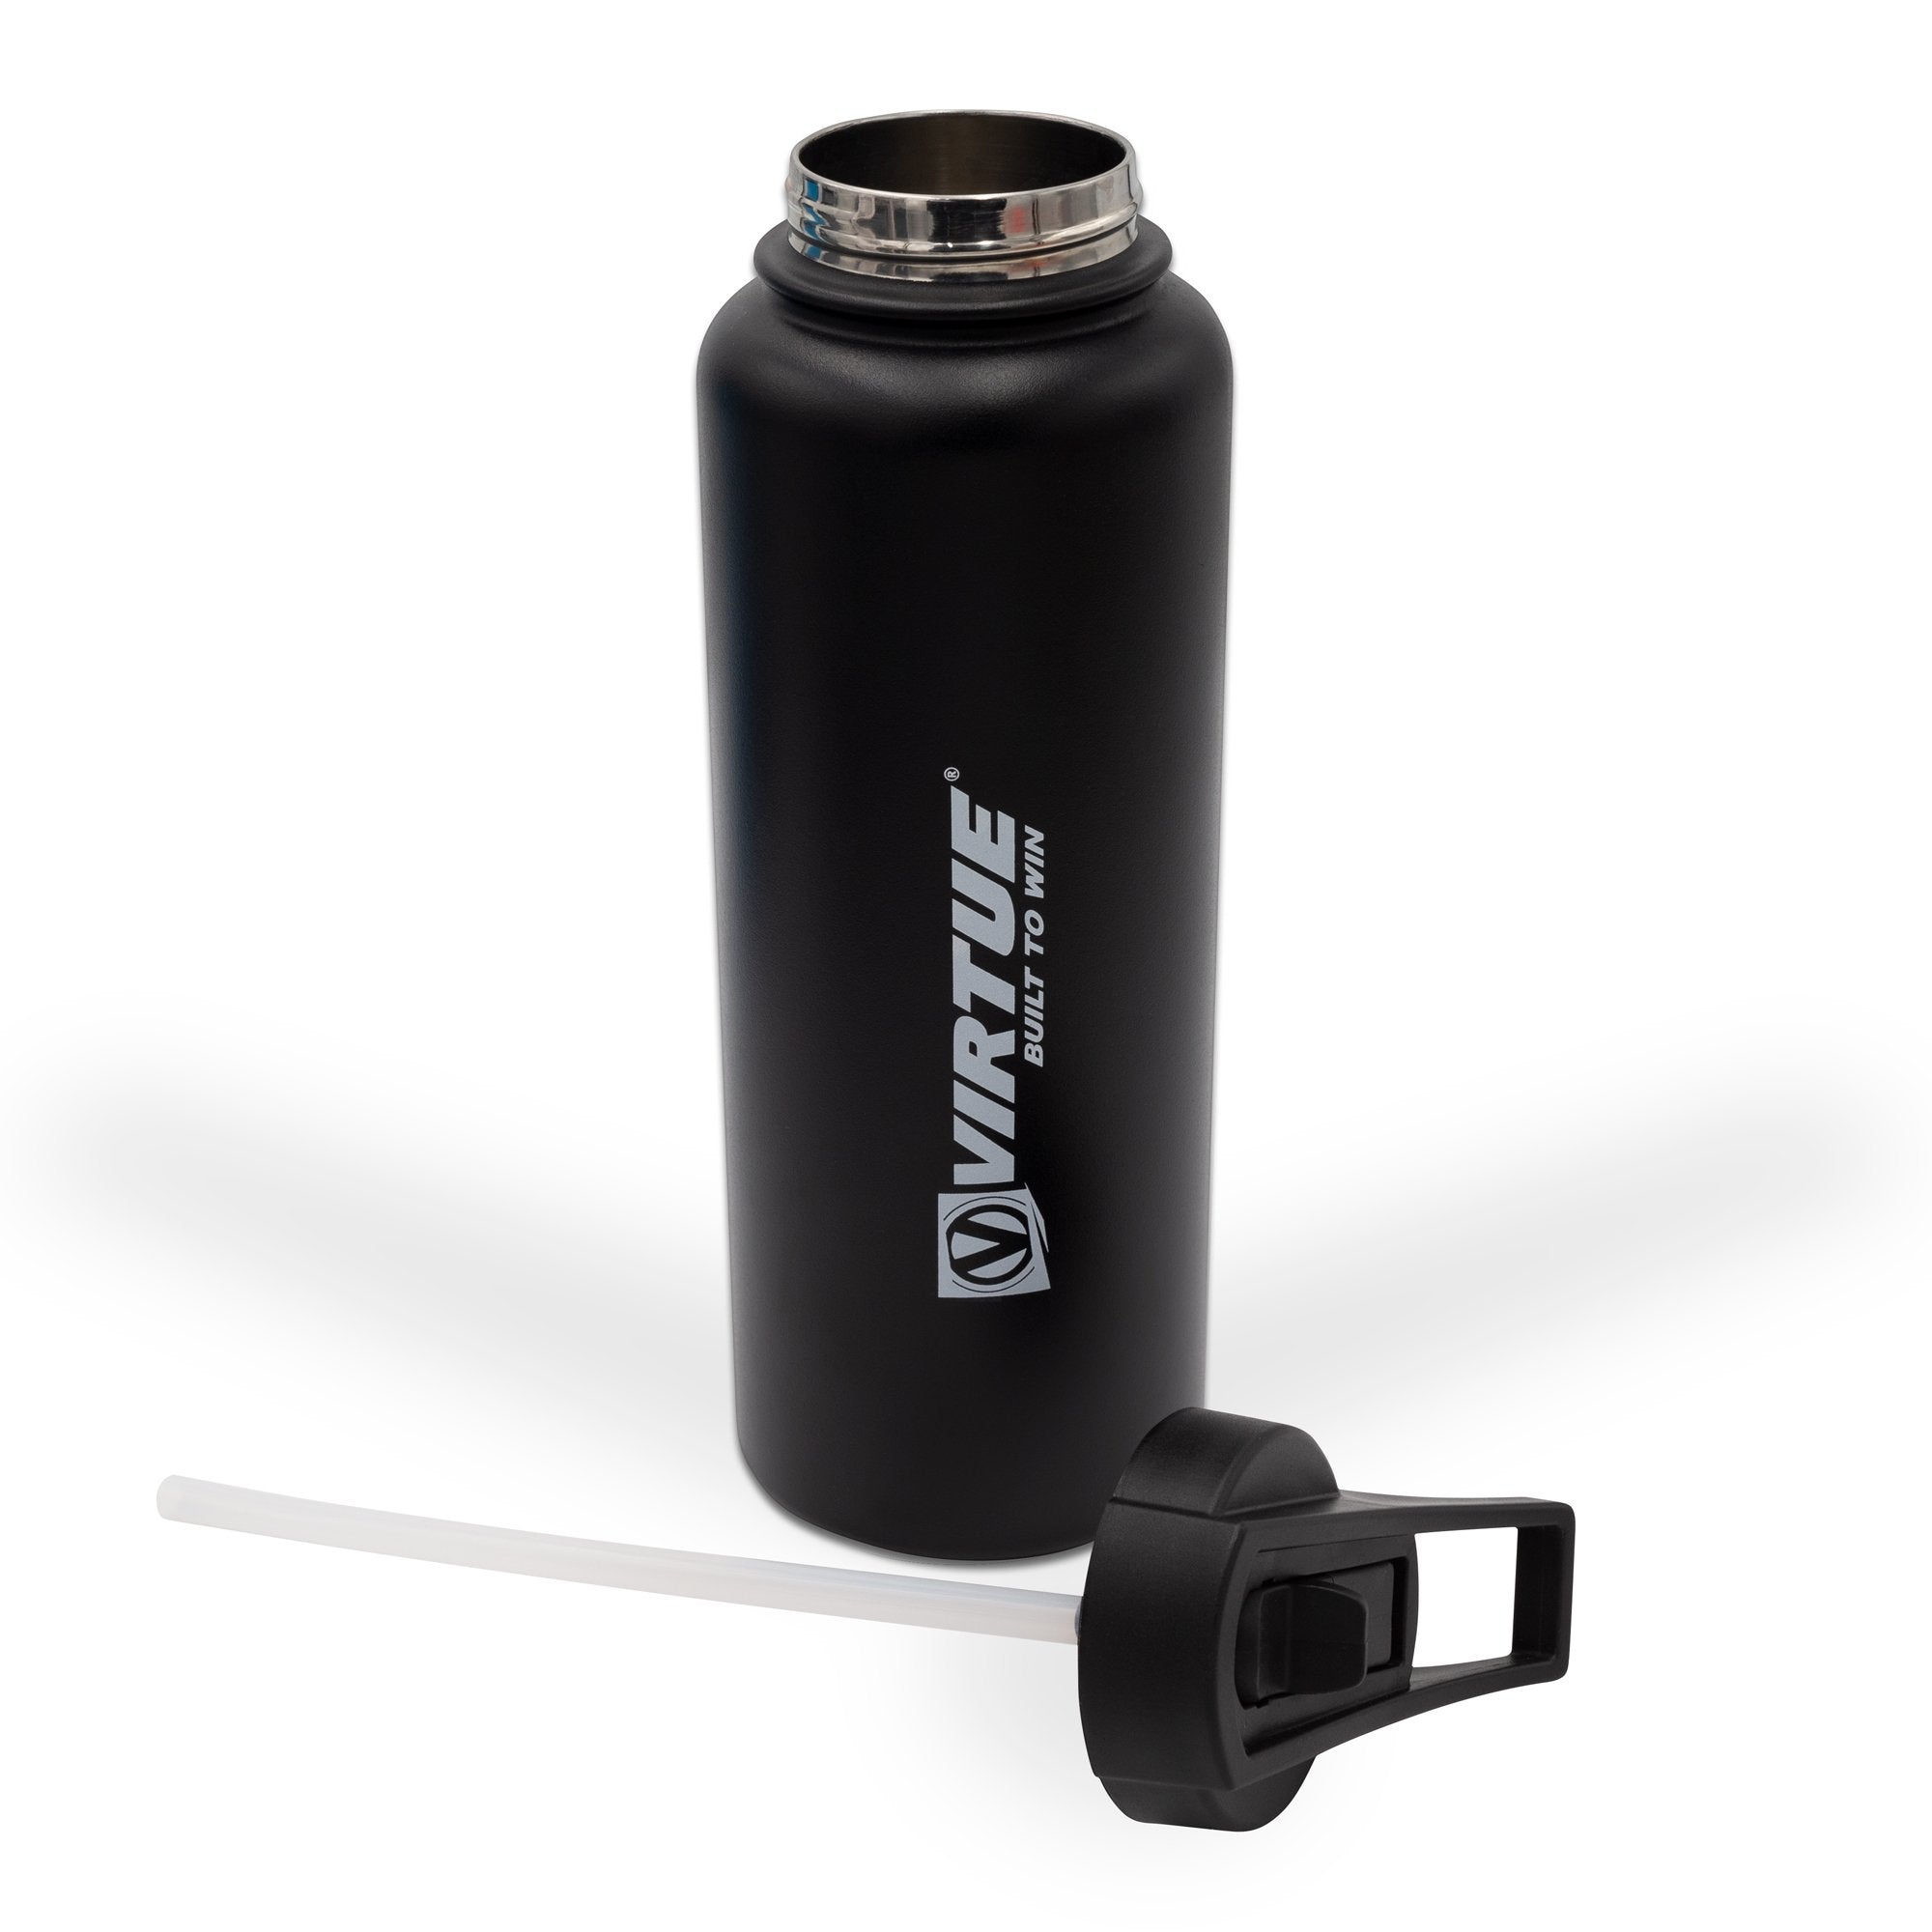 Virtue Stainless Steel 24Hr Cool Water Bottle - 37oz - Black